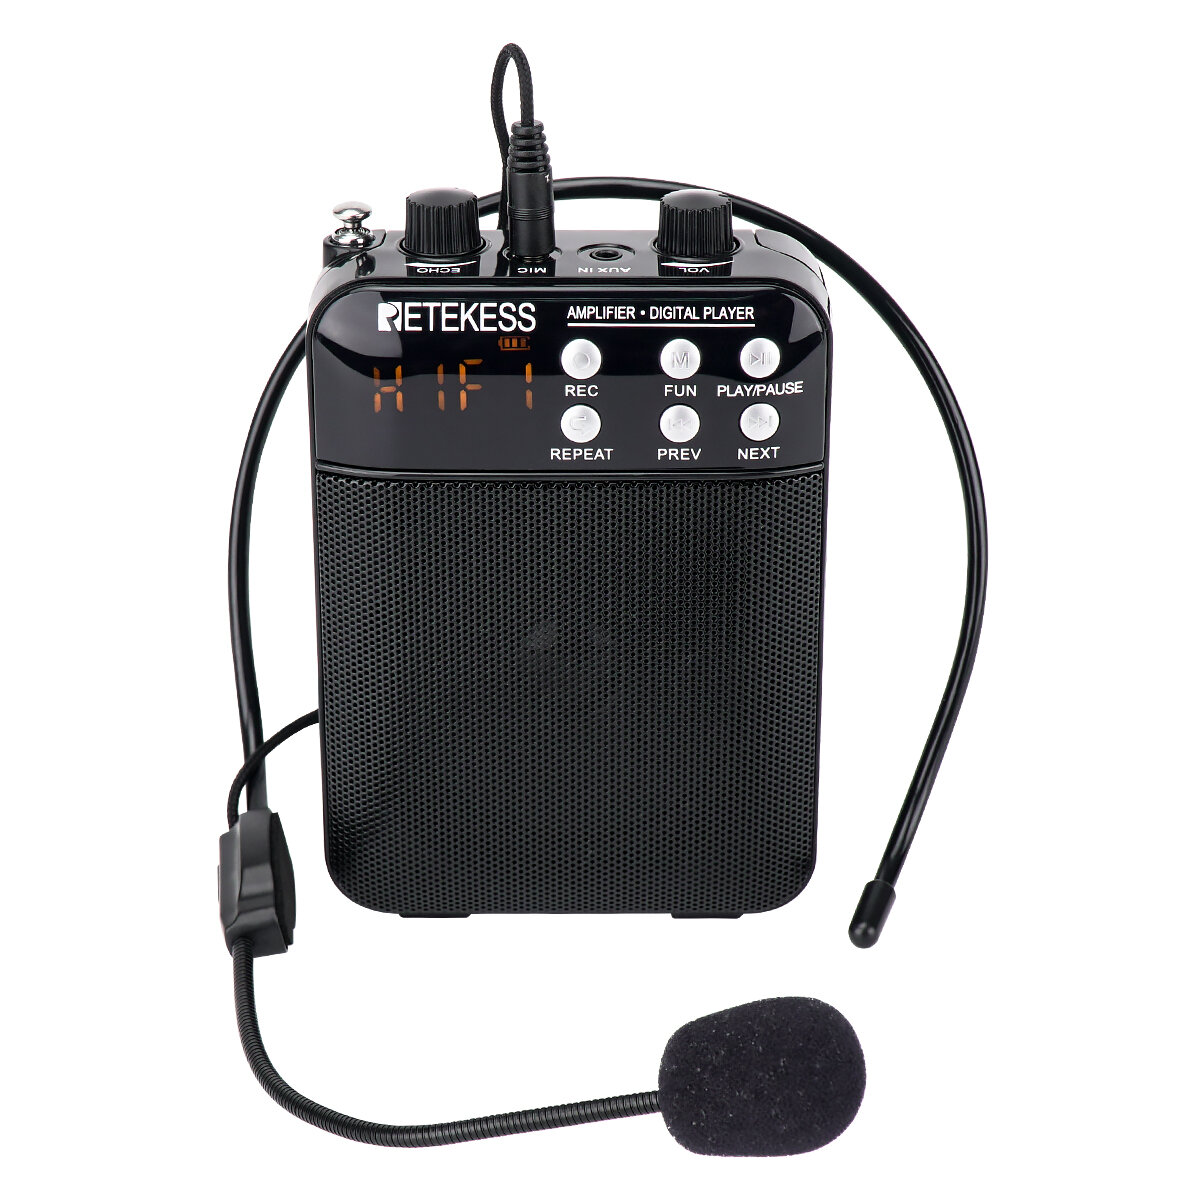 Retekess TR619 Megaphone Portable 3W FM Recording Voice Amplifier Teacher Microphone Speaker With Mp3 Player FM Radio Re